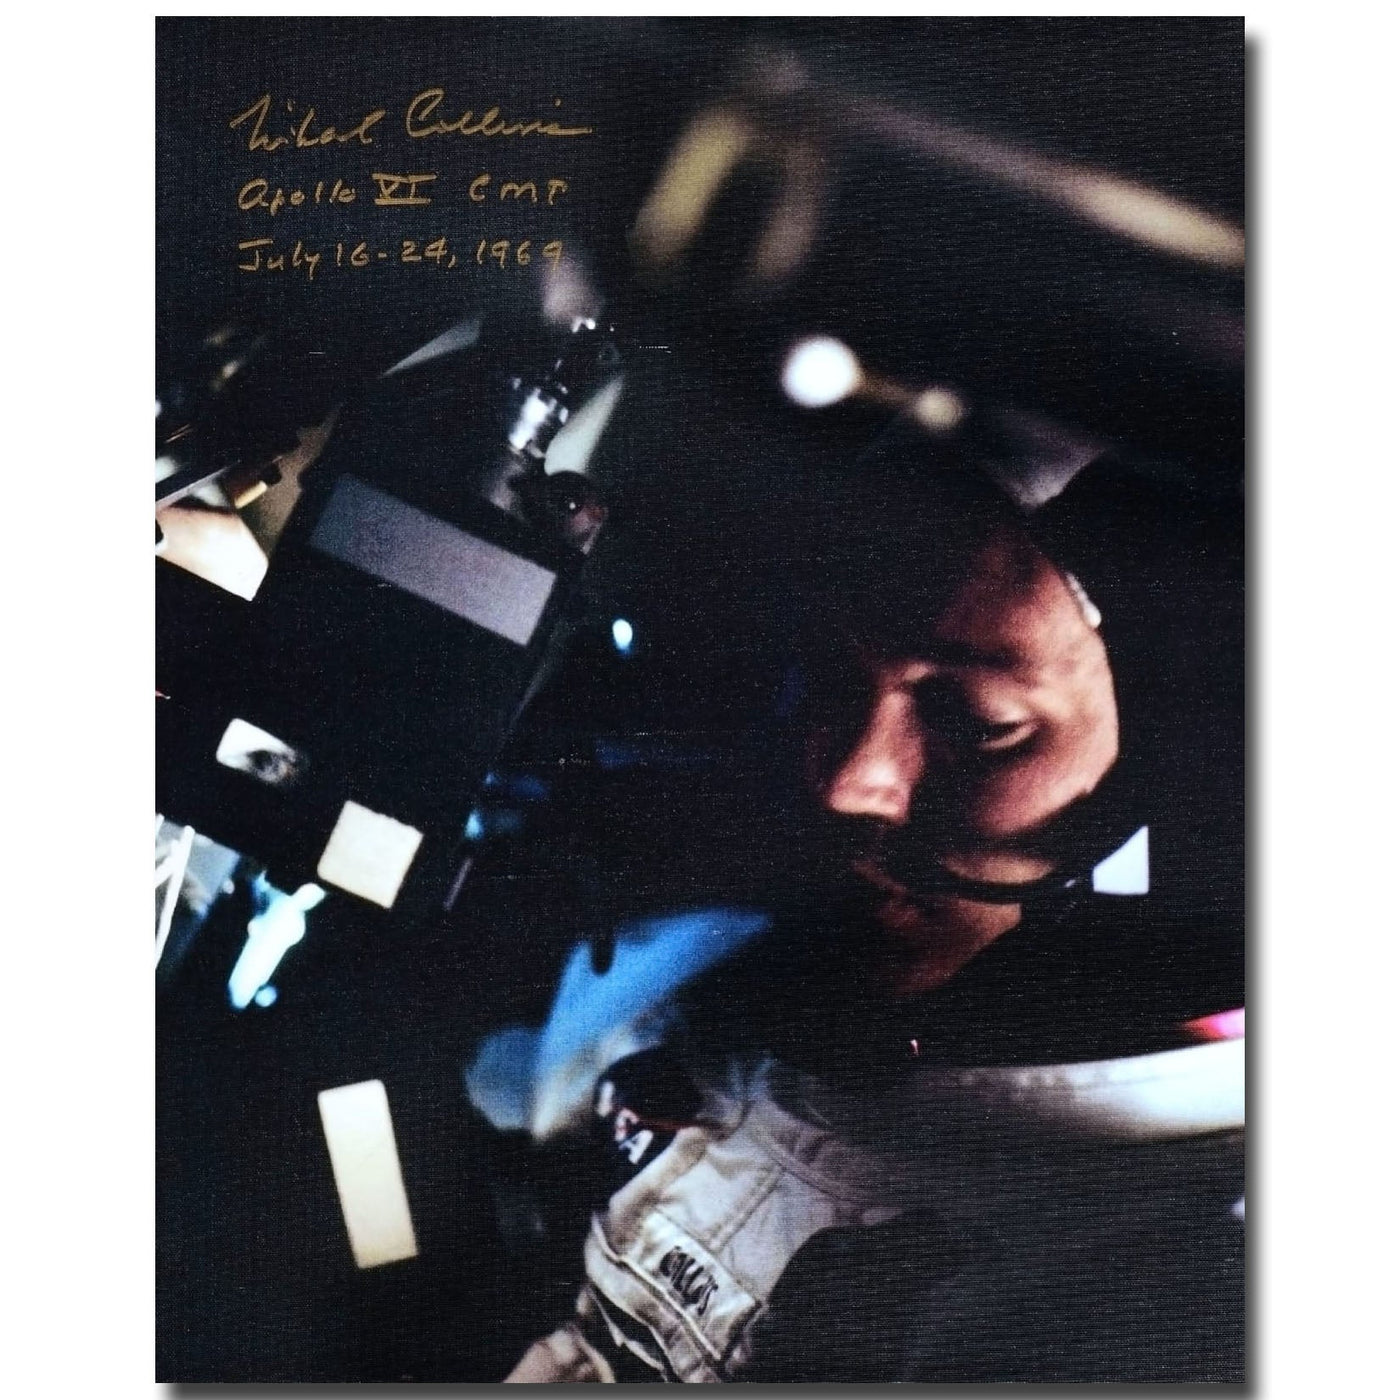 Michael Collins – large 16x20'' Apollo 11 canvas print